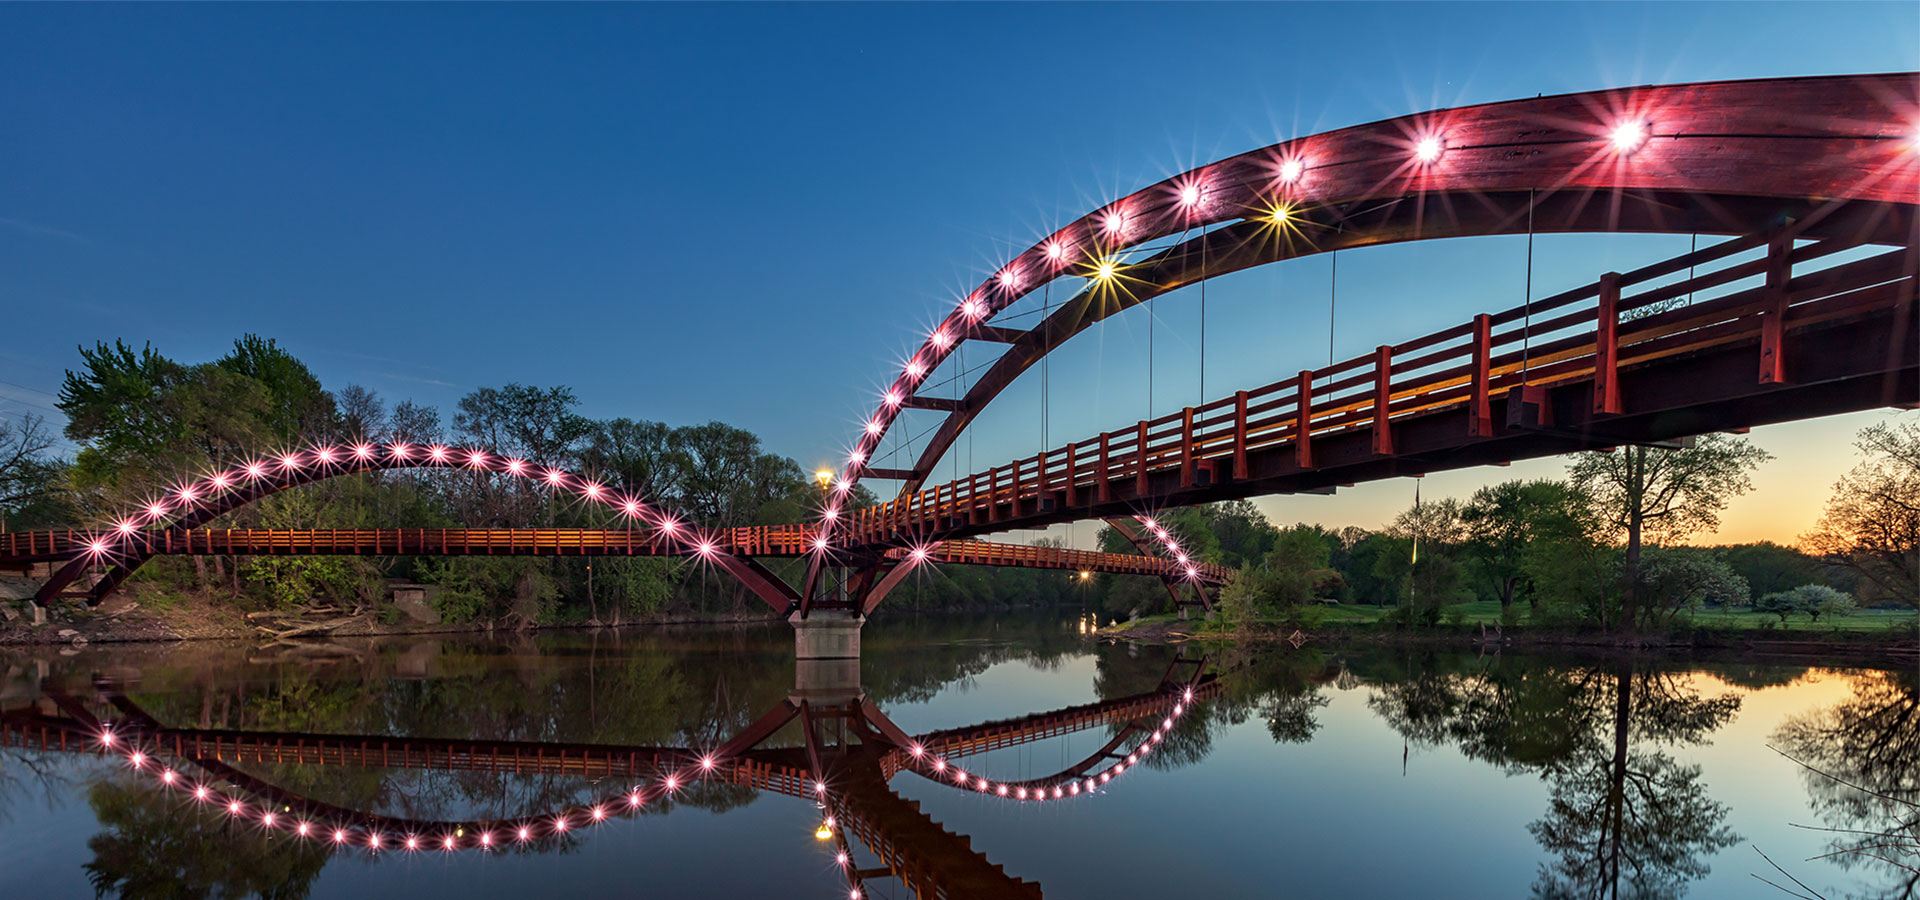 bridge reflects in the still river